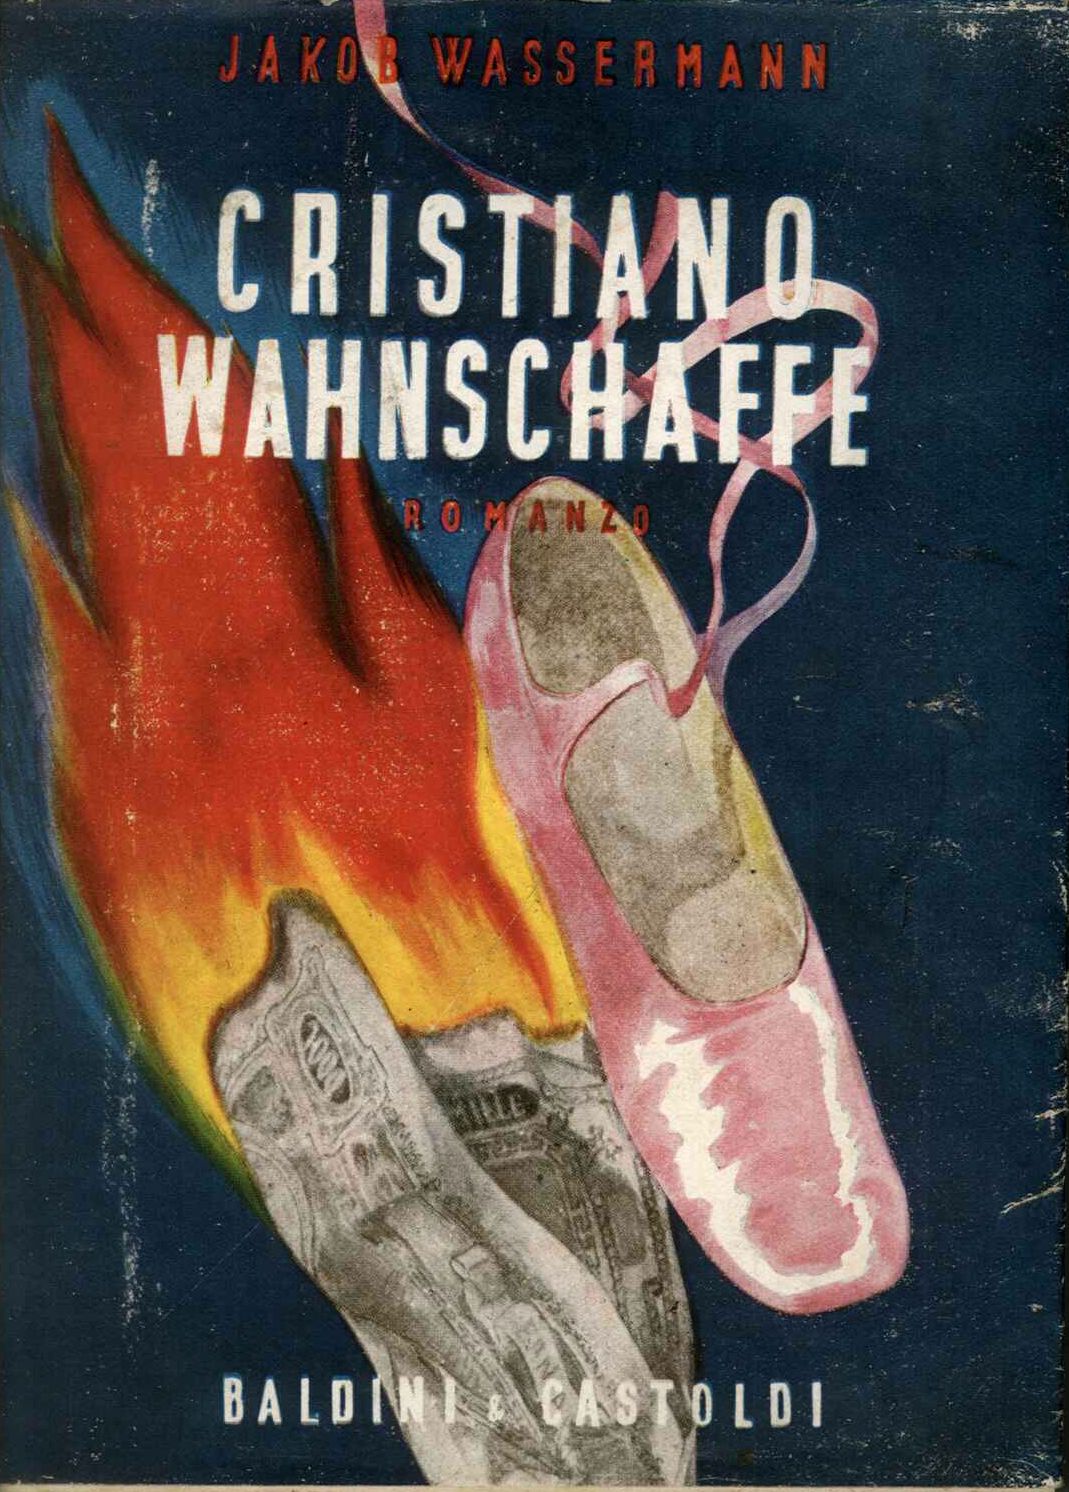 Cristiano Wahnschaffe